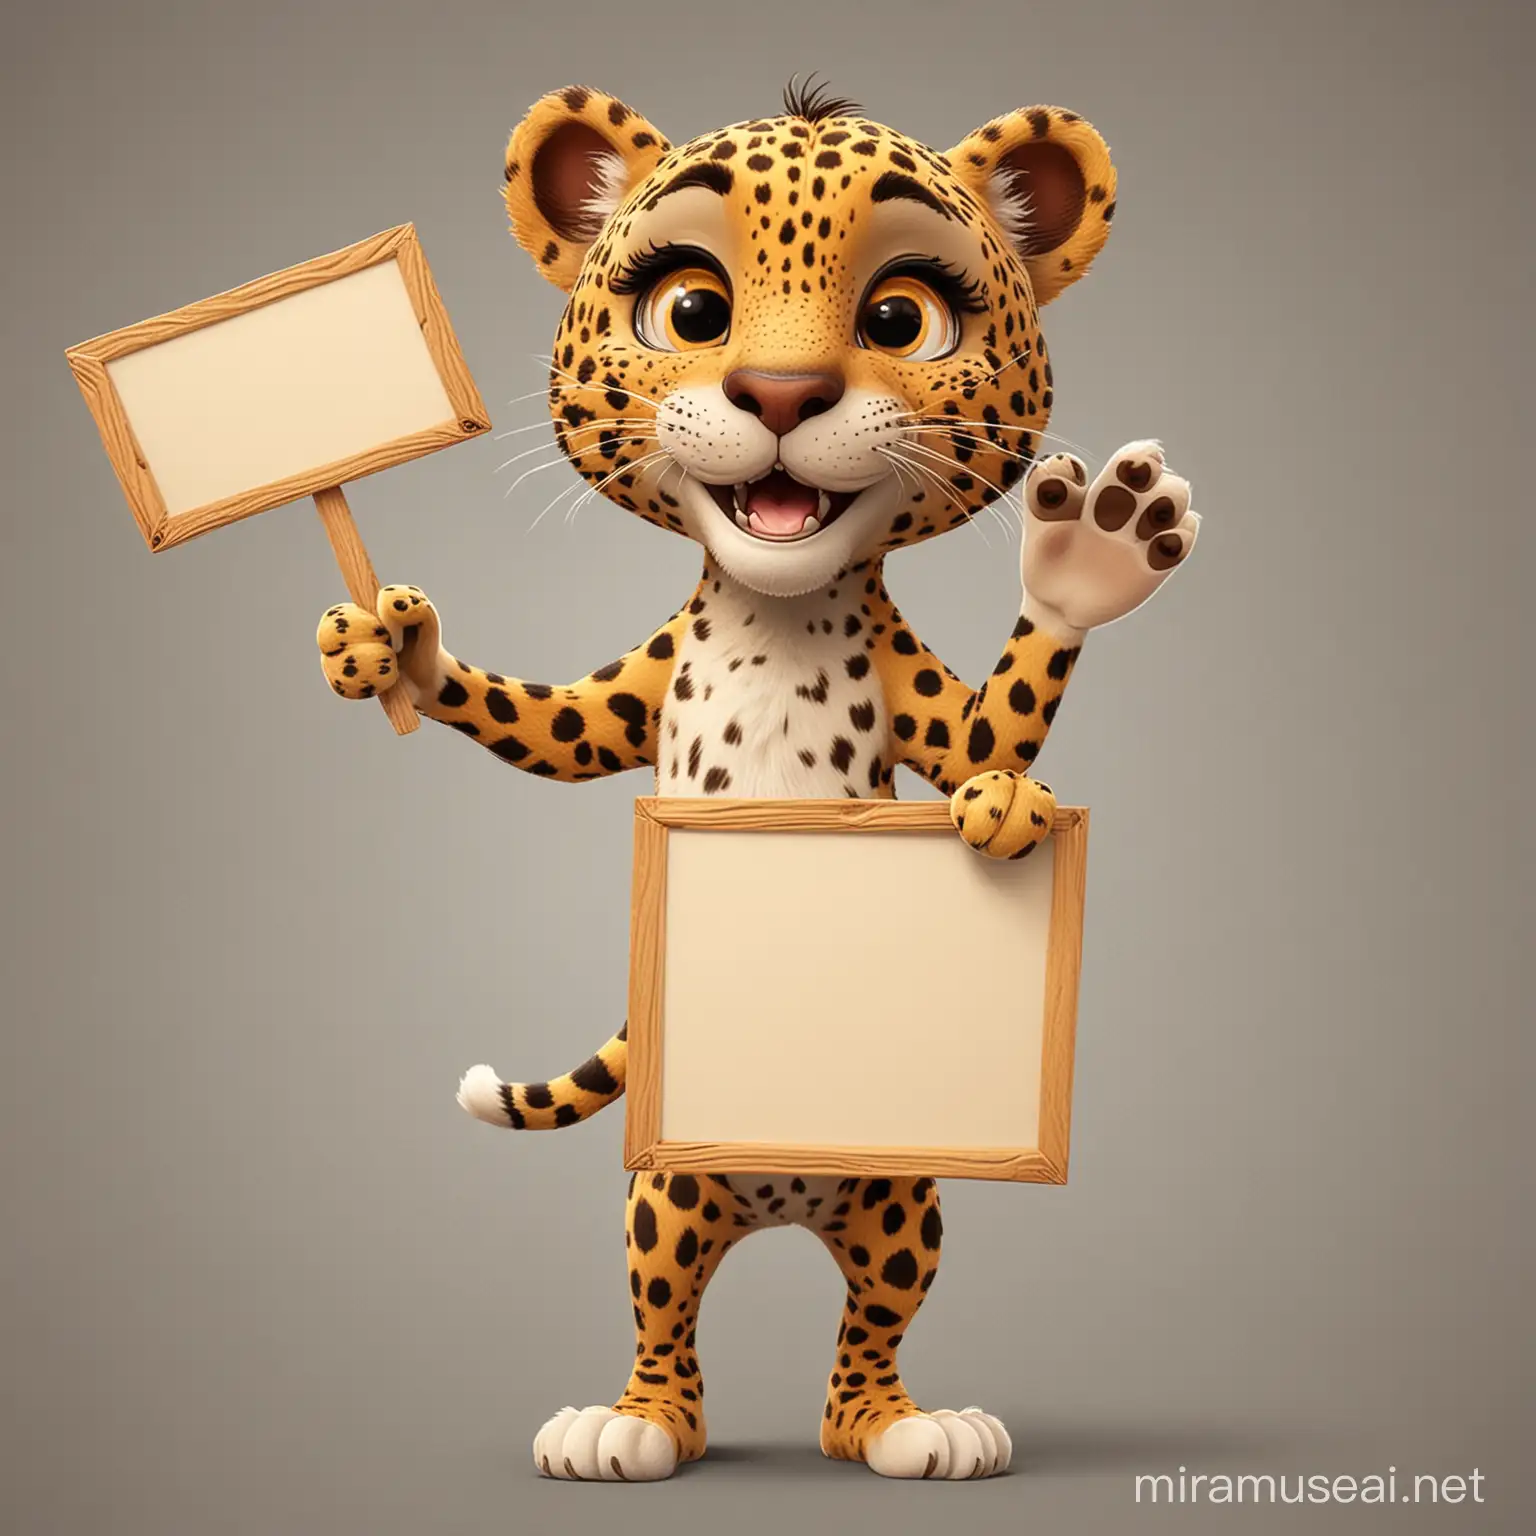 Cheerful Cartoon Leopard Holding a Signboard